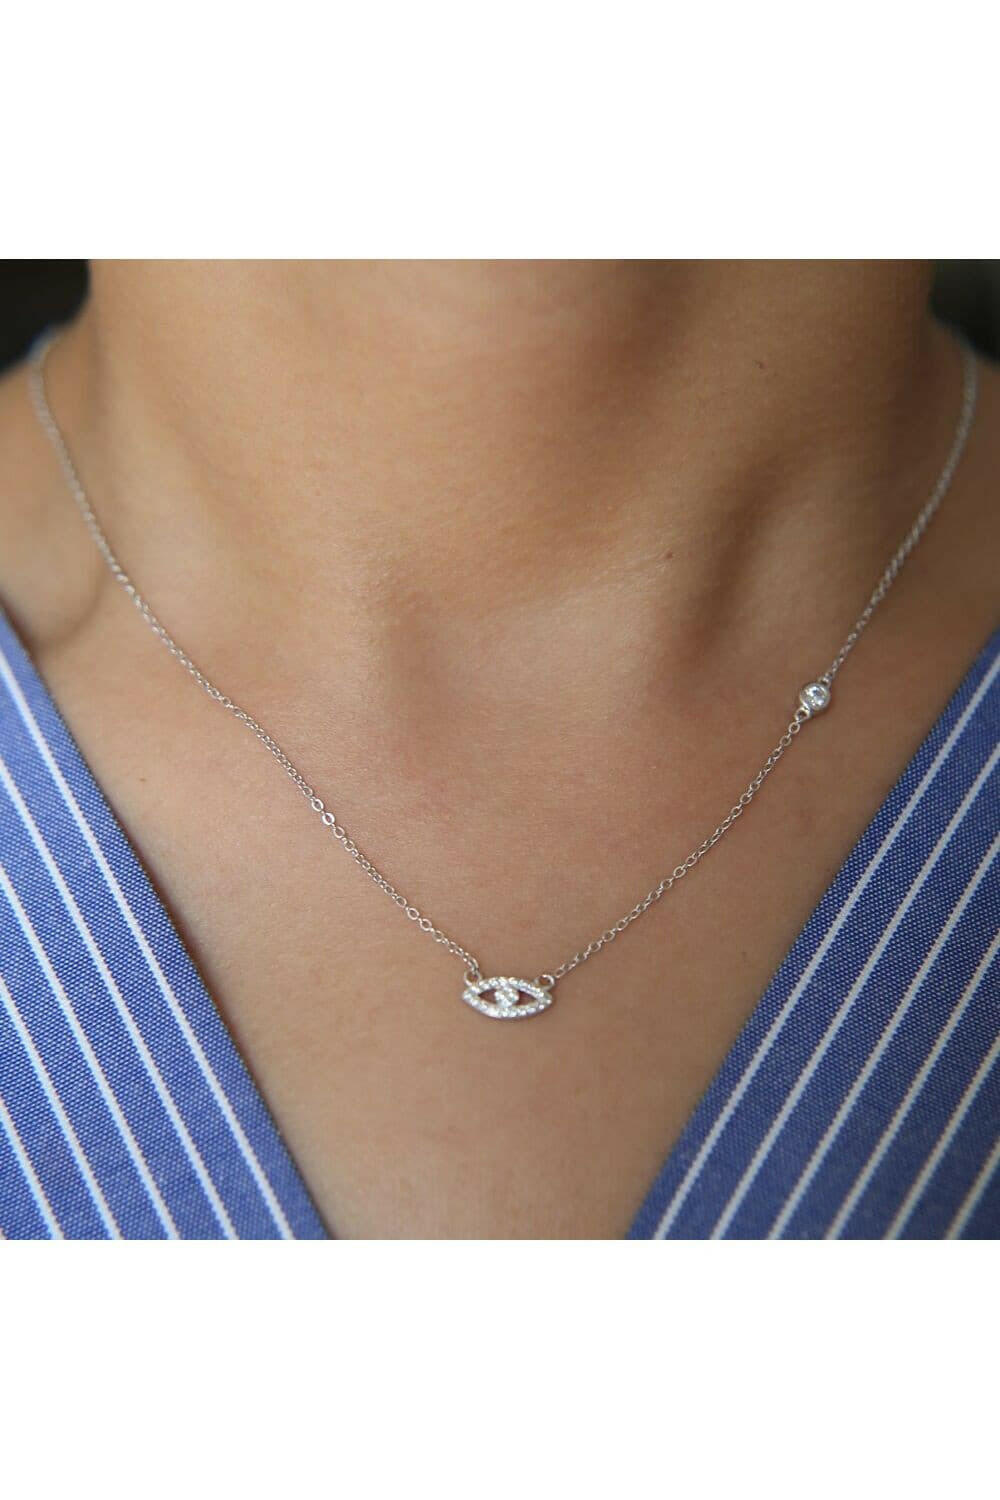 Sparking Dainty Thin Chain Fine Silver 925 Jewelry - Tiny Evil Eye Bezel Cz Connector - Charm Necklace.